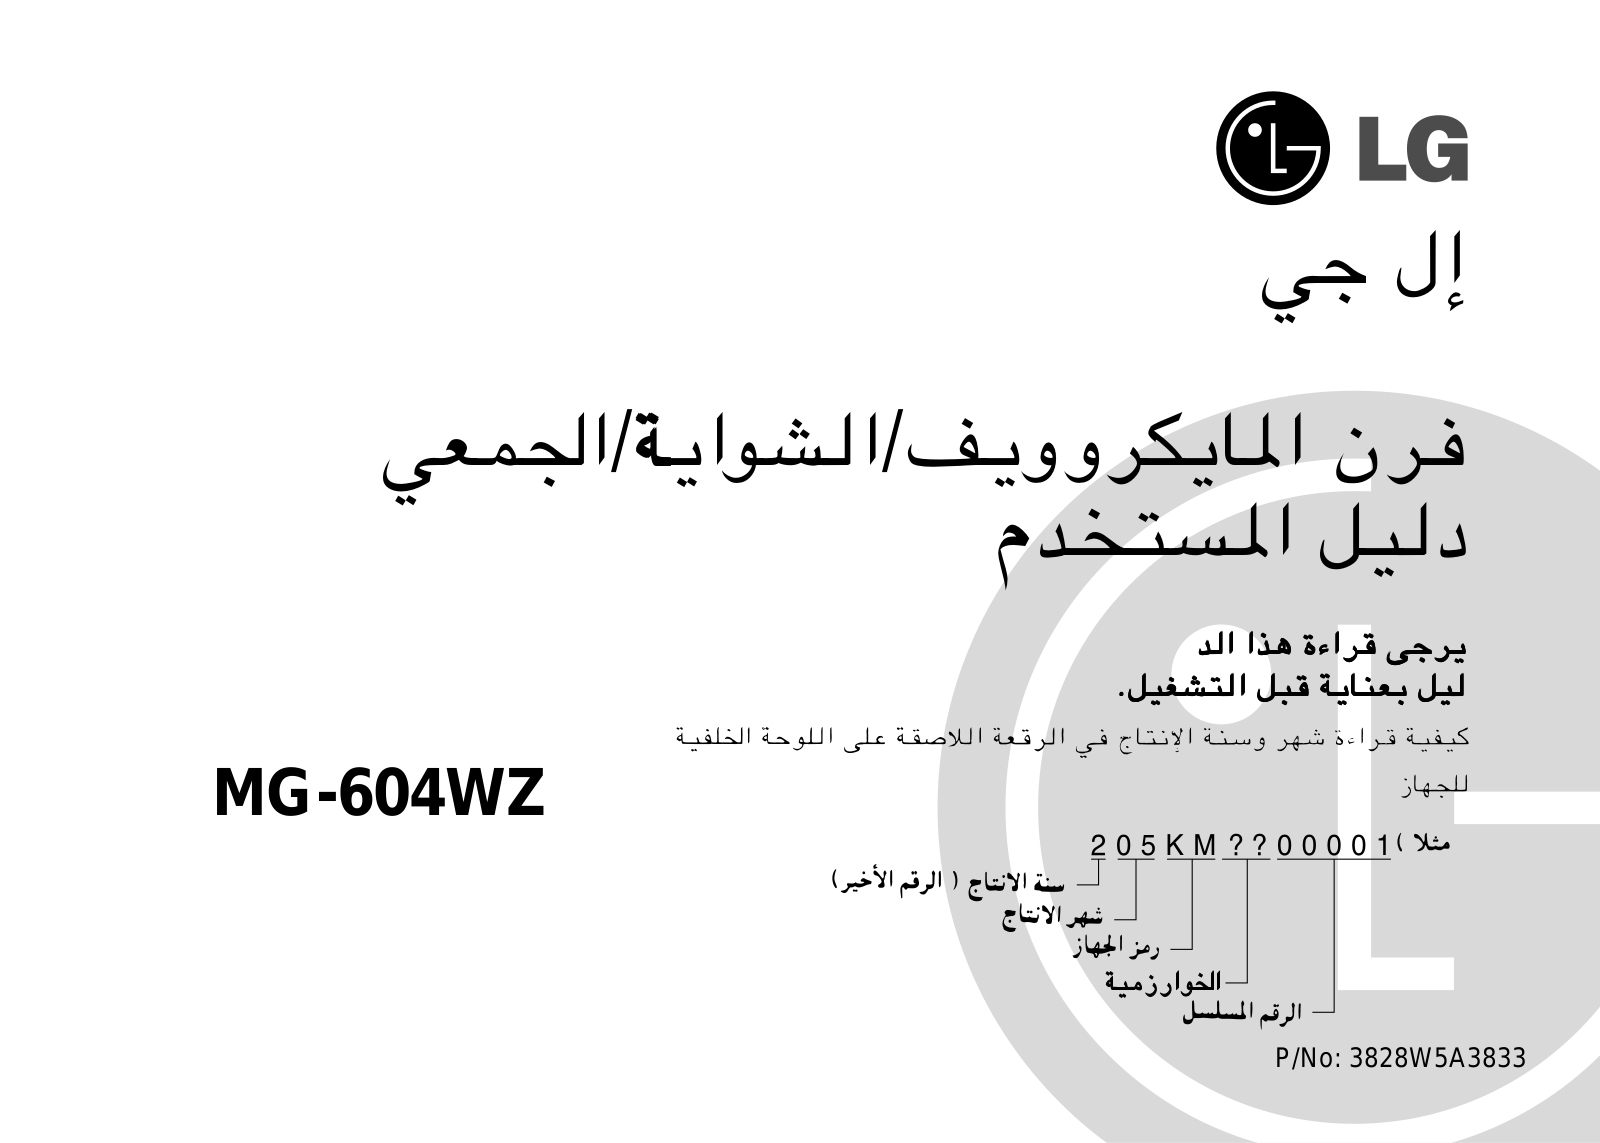 LG MG-604WZ Owner’s Manual